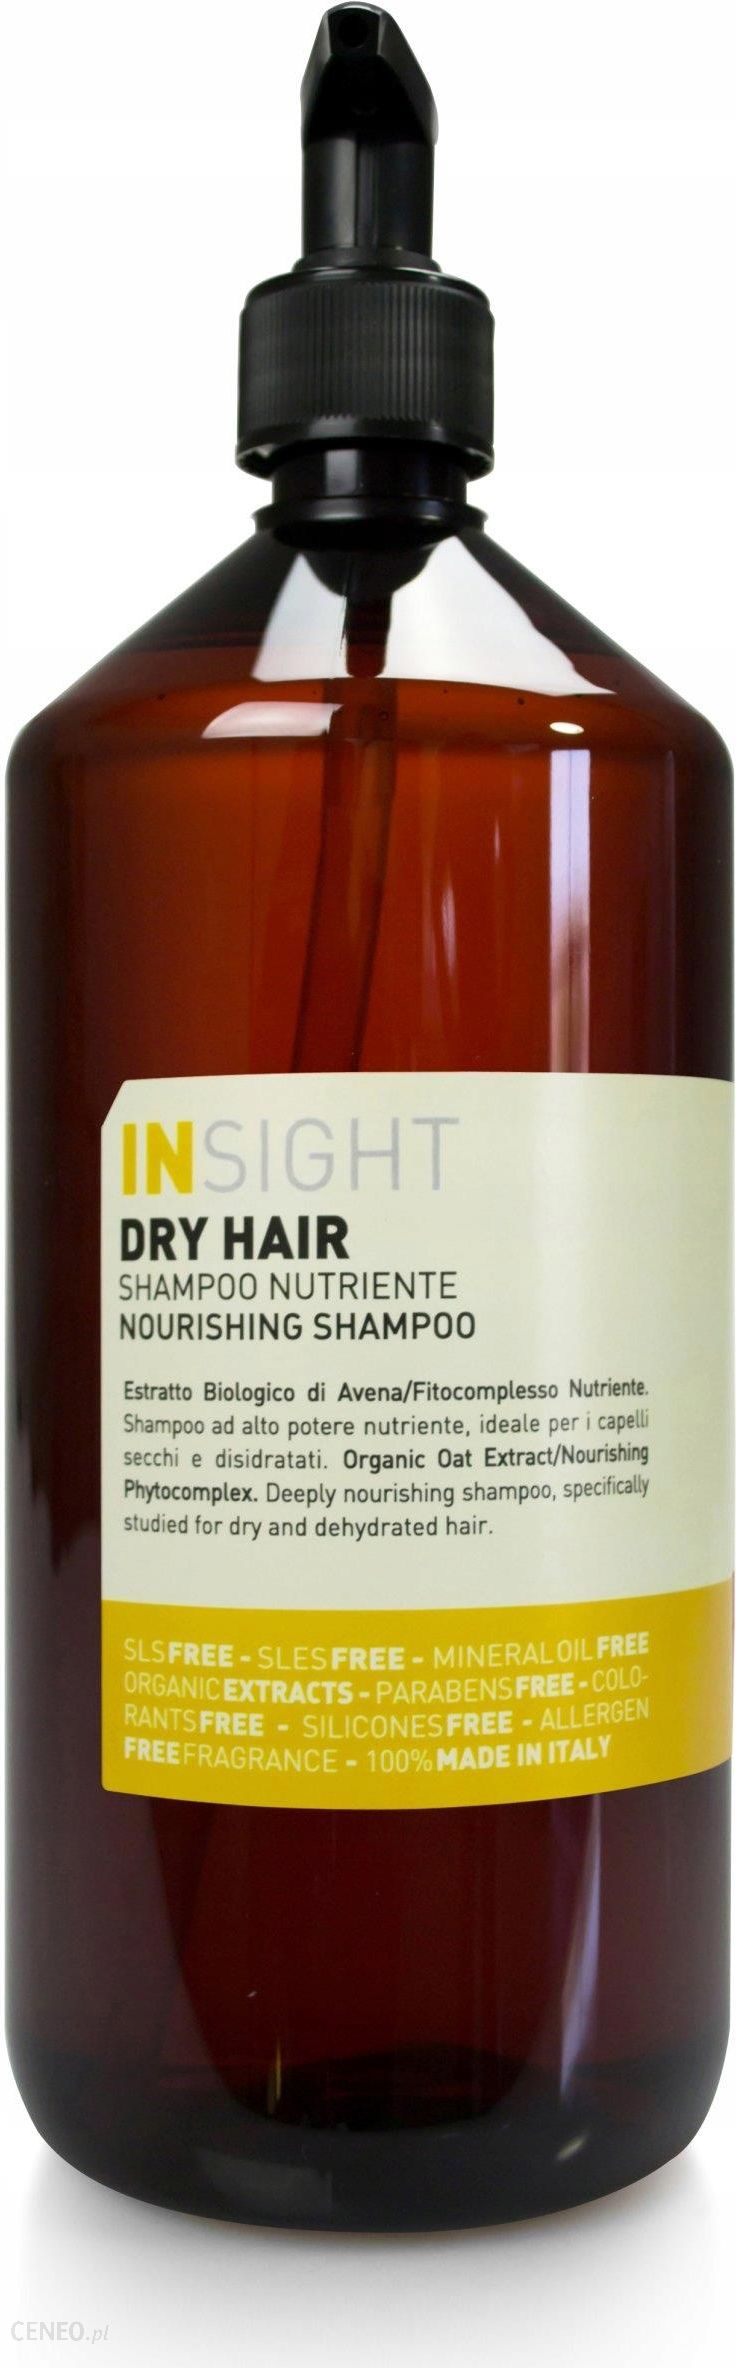 insight szampon nourishing